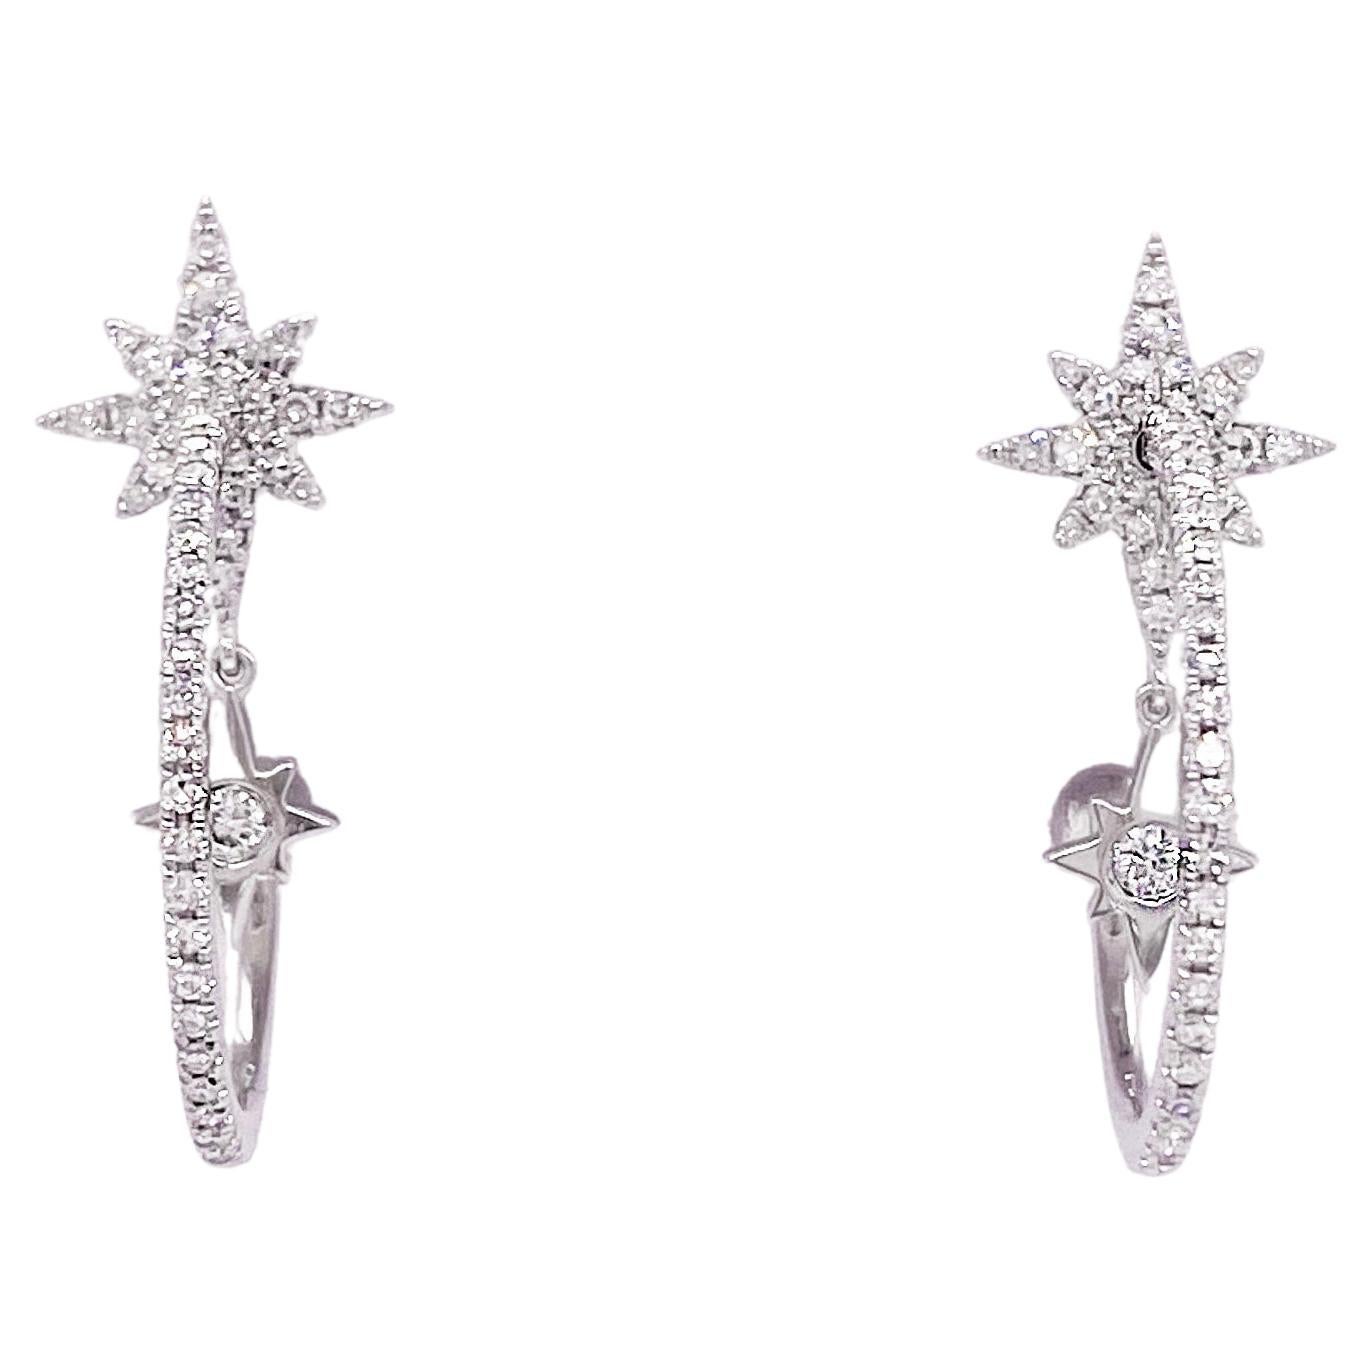 Diamond Star Hoop Earrings, White Gold, J-Hoops and Starburst Shapes For Sale